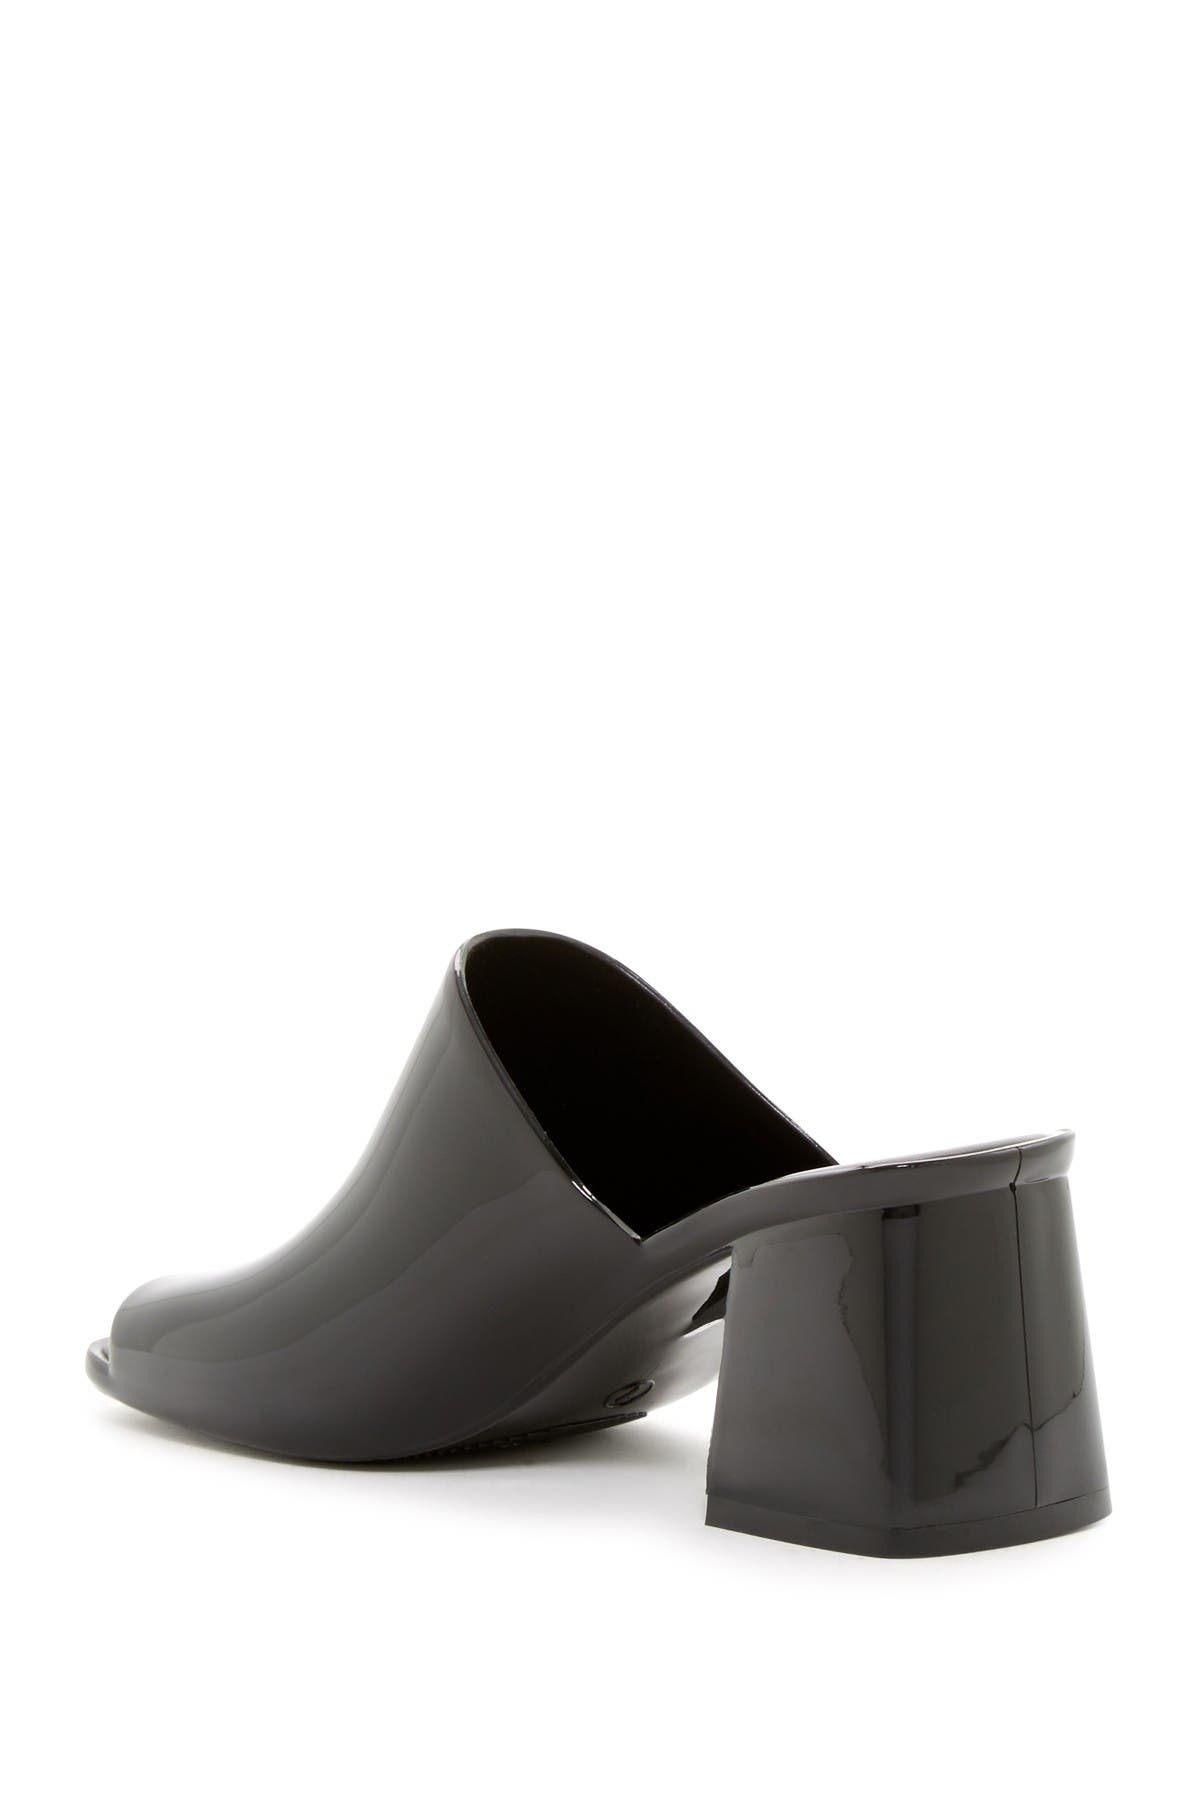 SH51 Jeffrey Campbell Womens Shoes Petra Jelly Block Heel Mules Black Glitter 